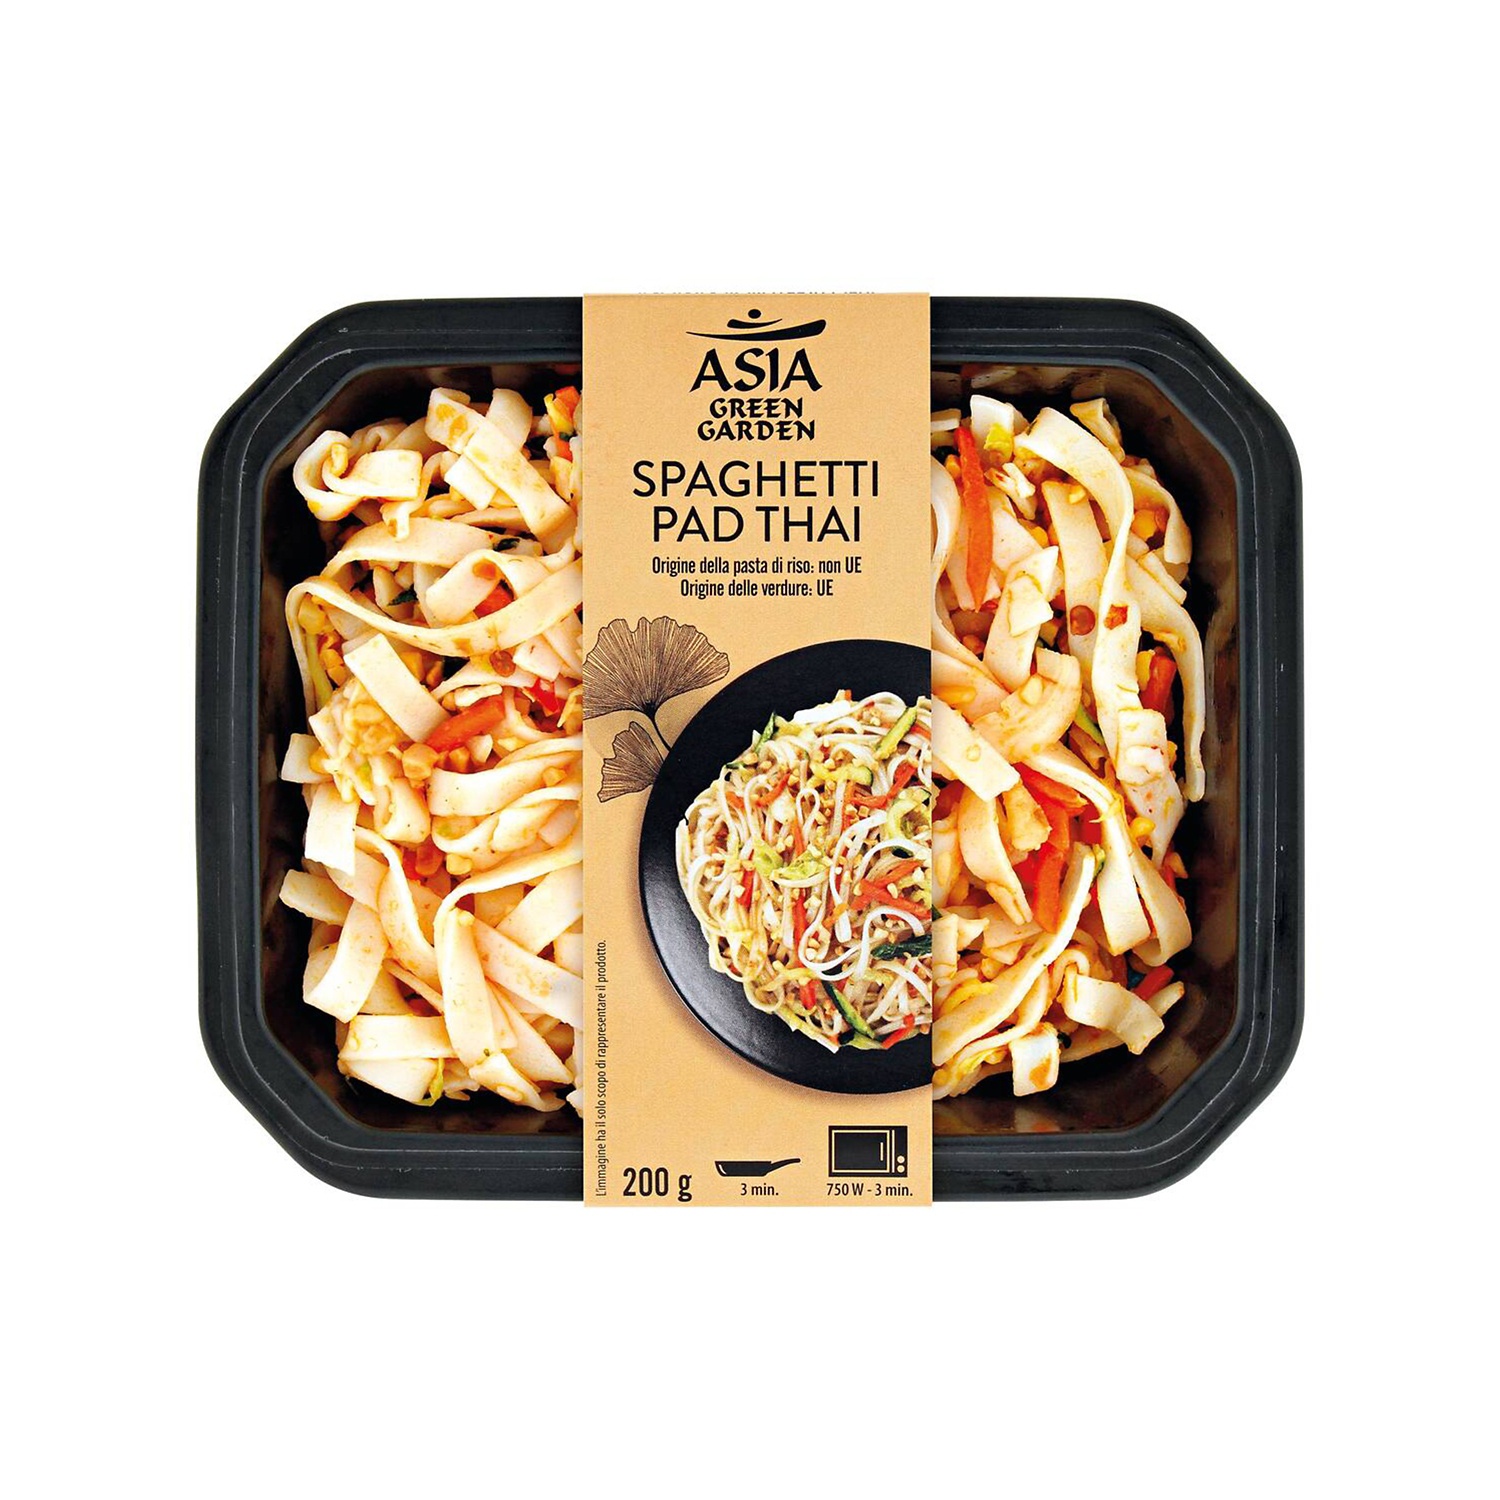 ASIA GREEN GARDEN Spaghetti Pad Thai